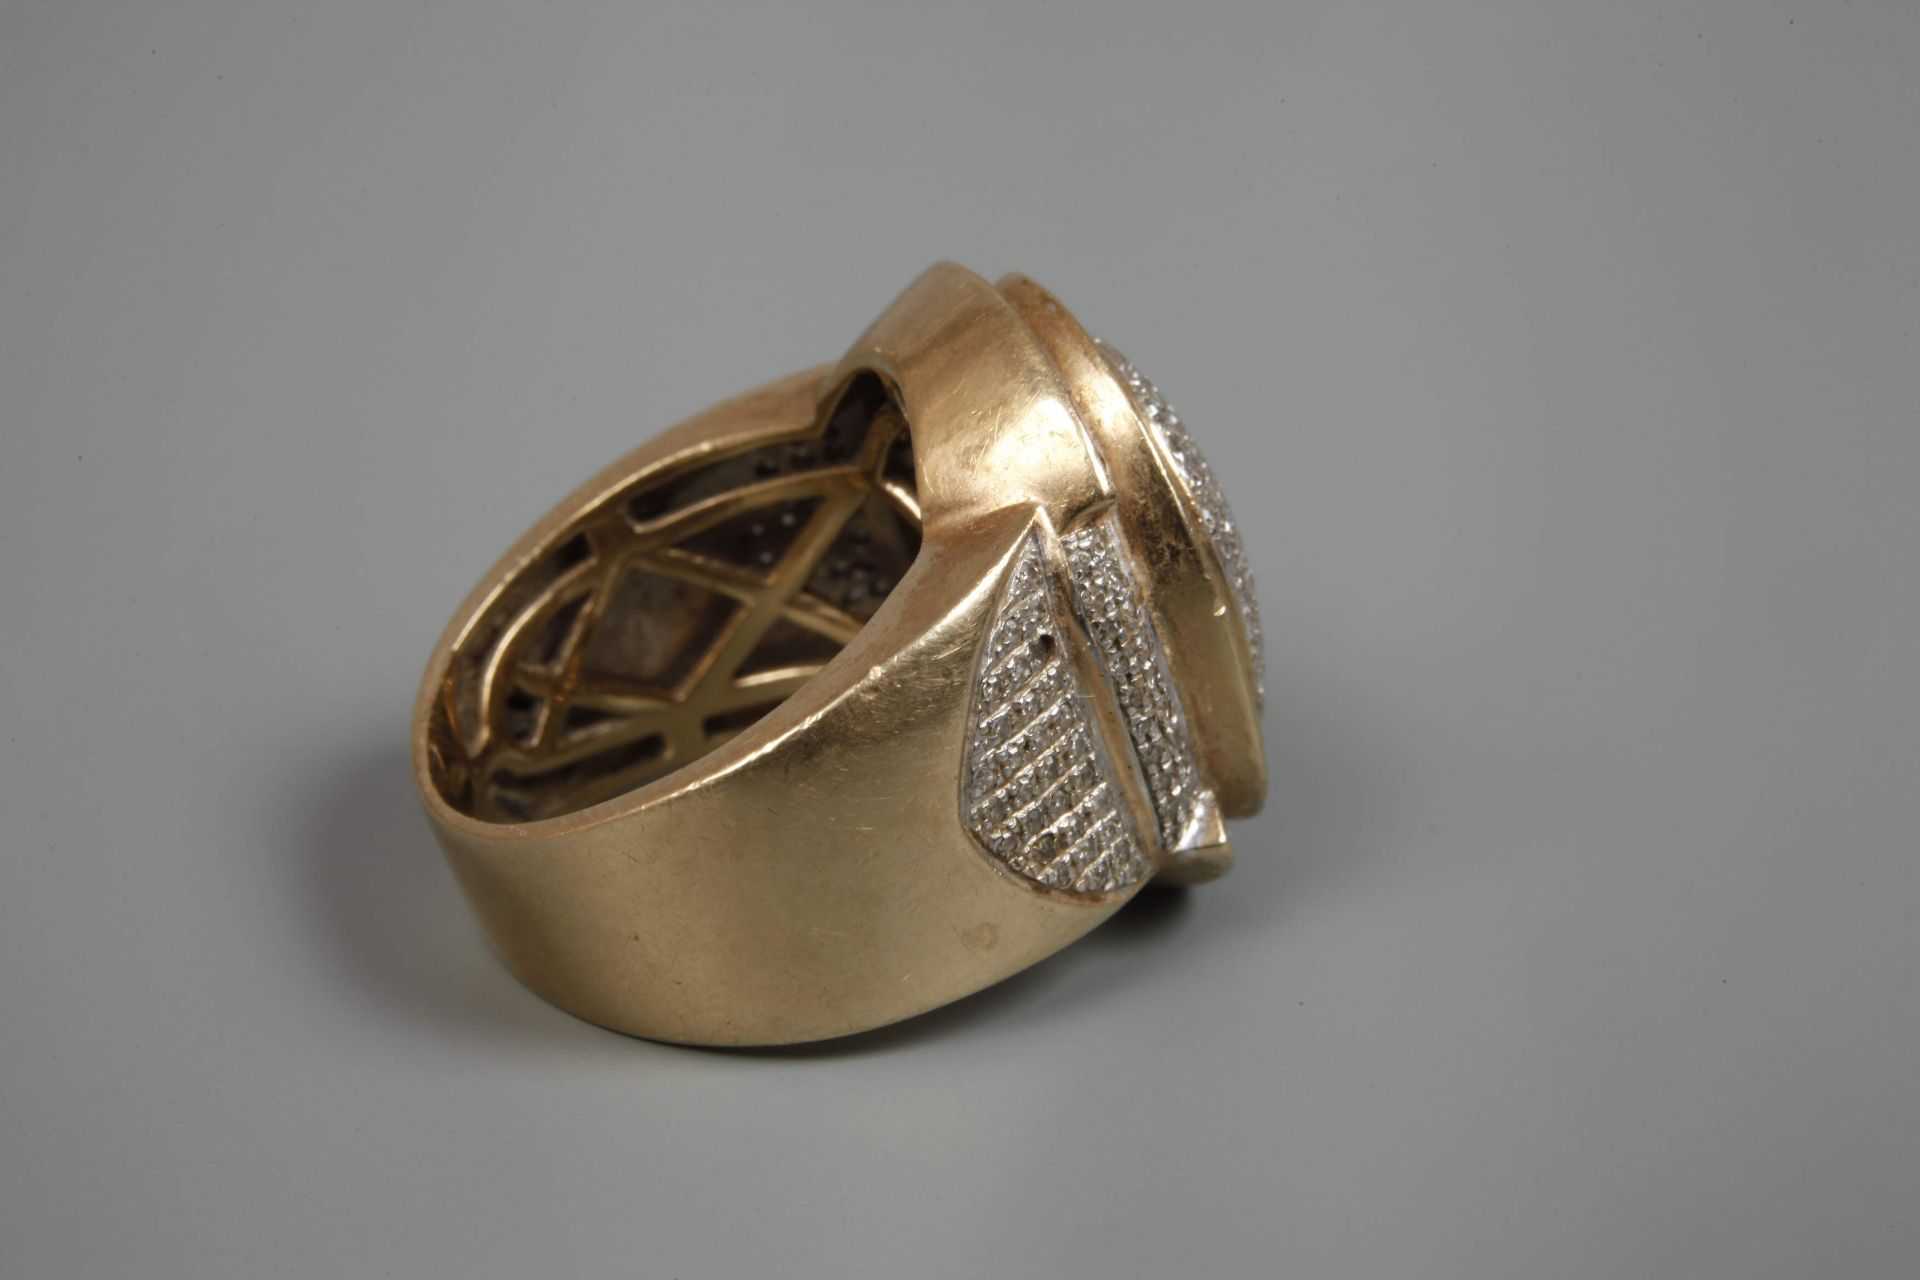 Precious ring with diamond setting - Image 3 of 4